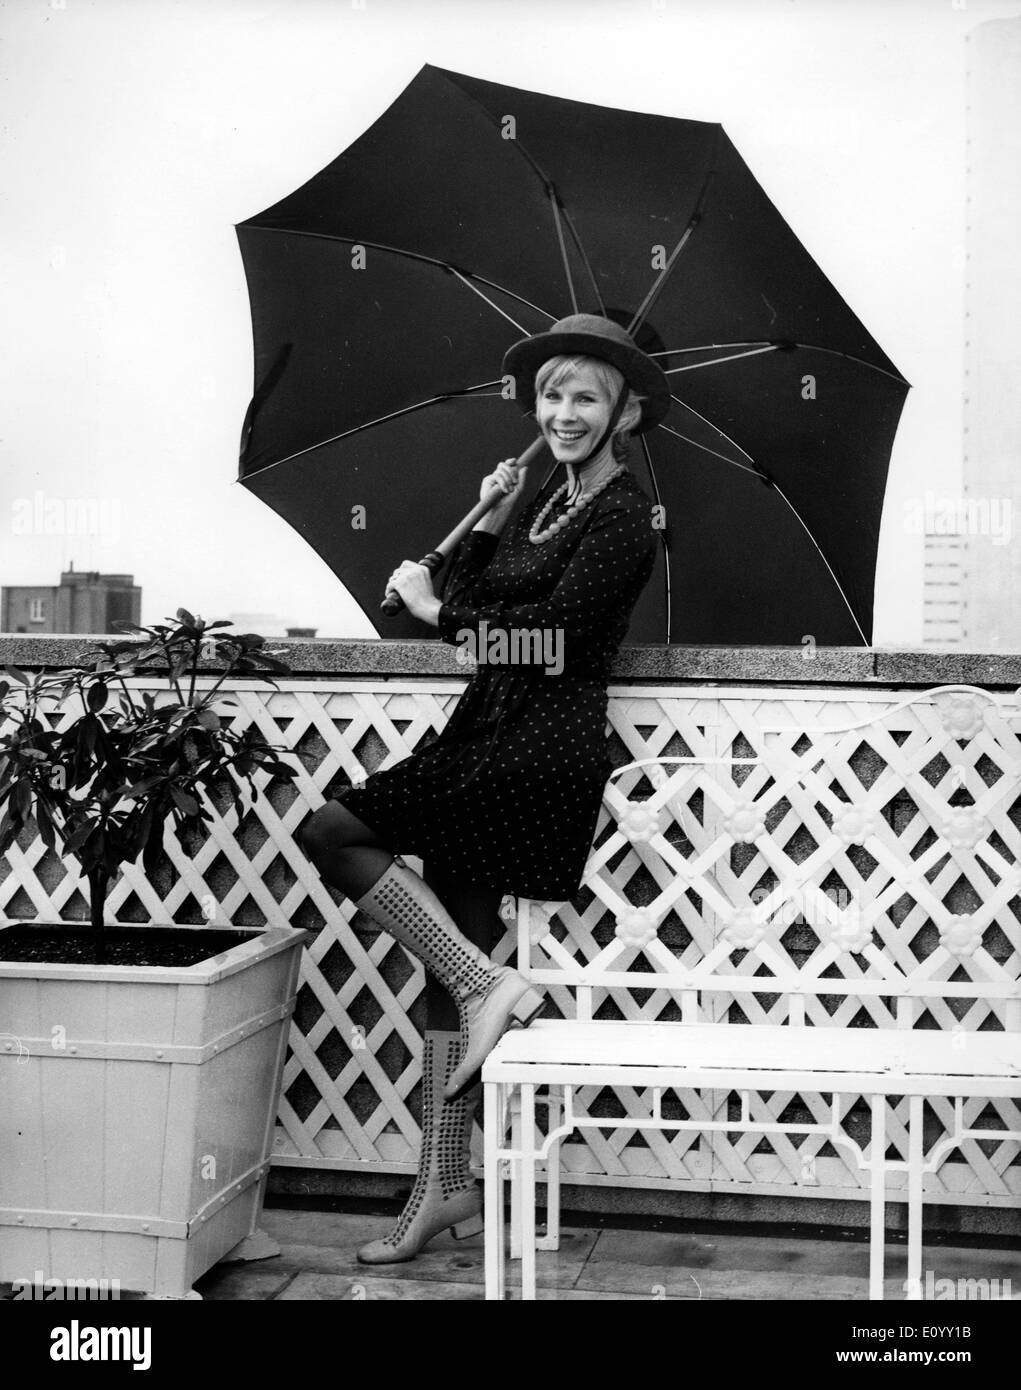 Actress Bibi Andersson in rain on balcony Stock Photo